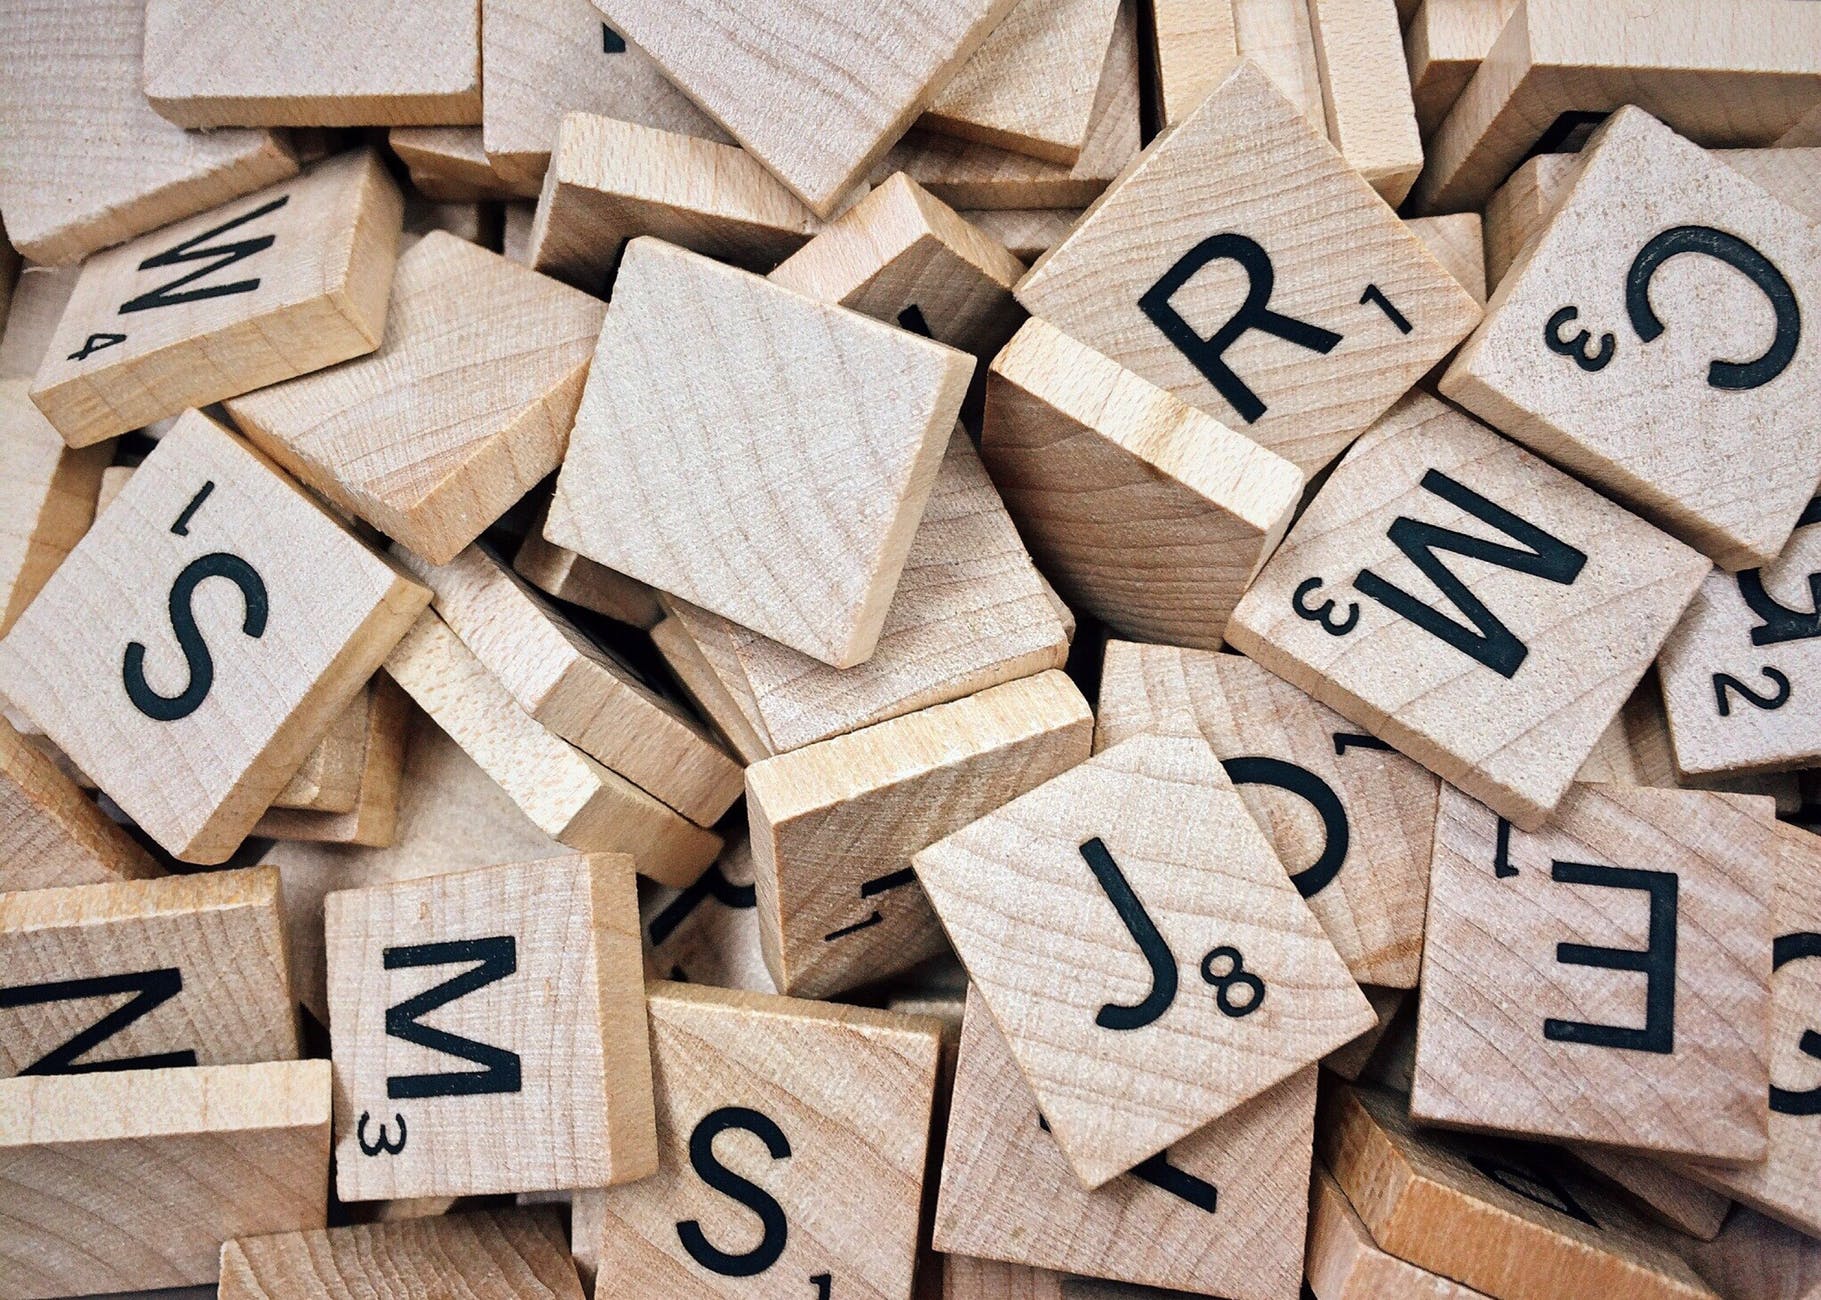 Jumbled up wooden scrabble letters